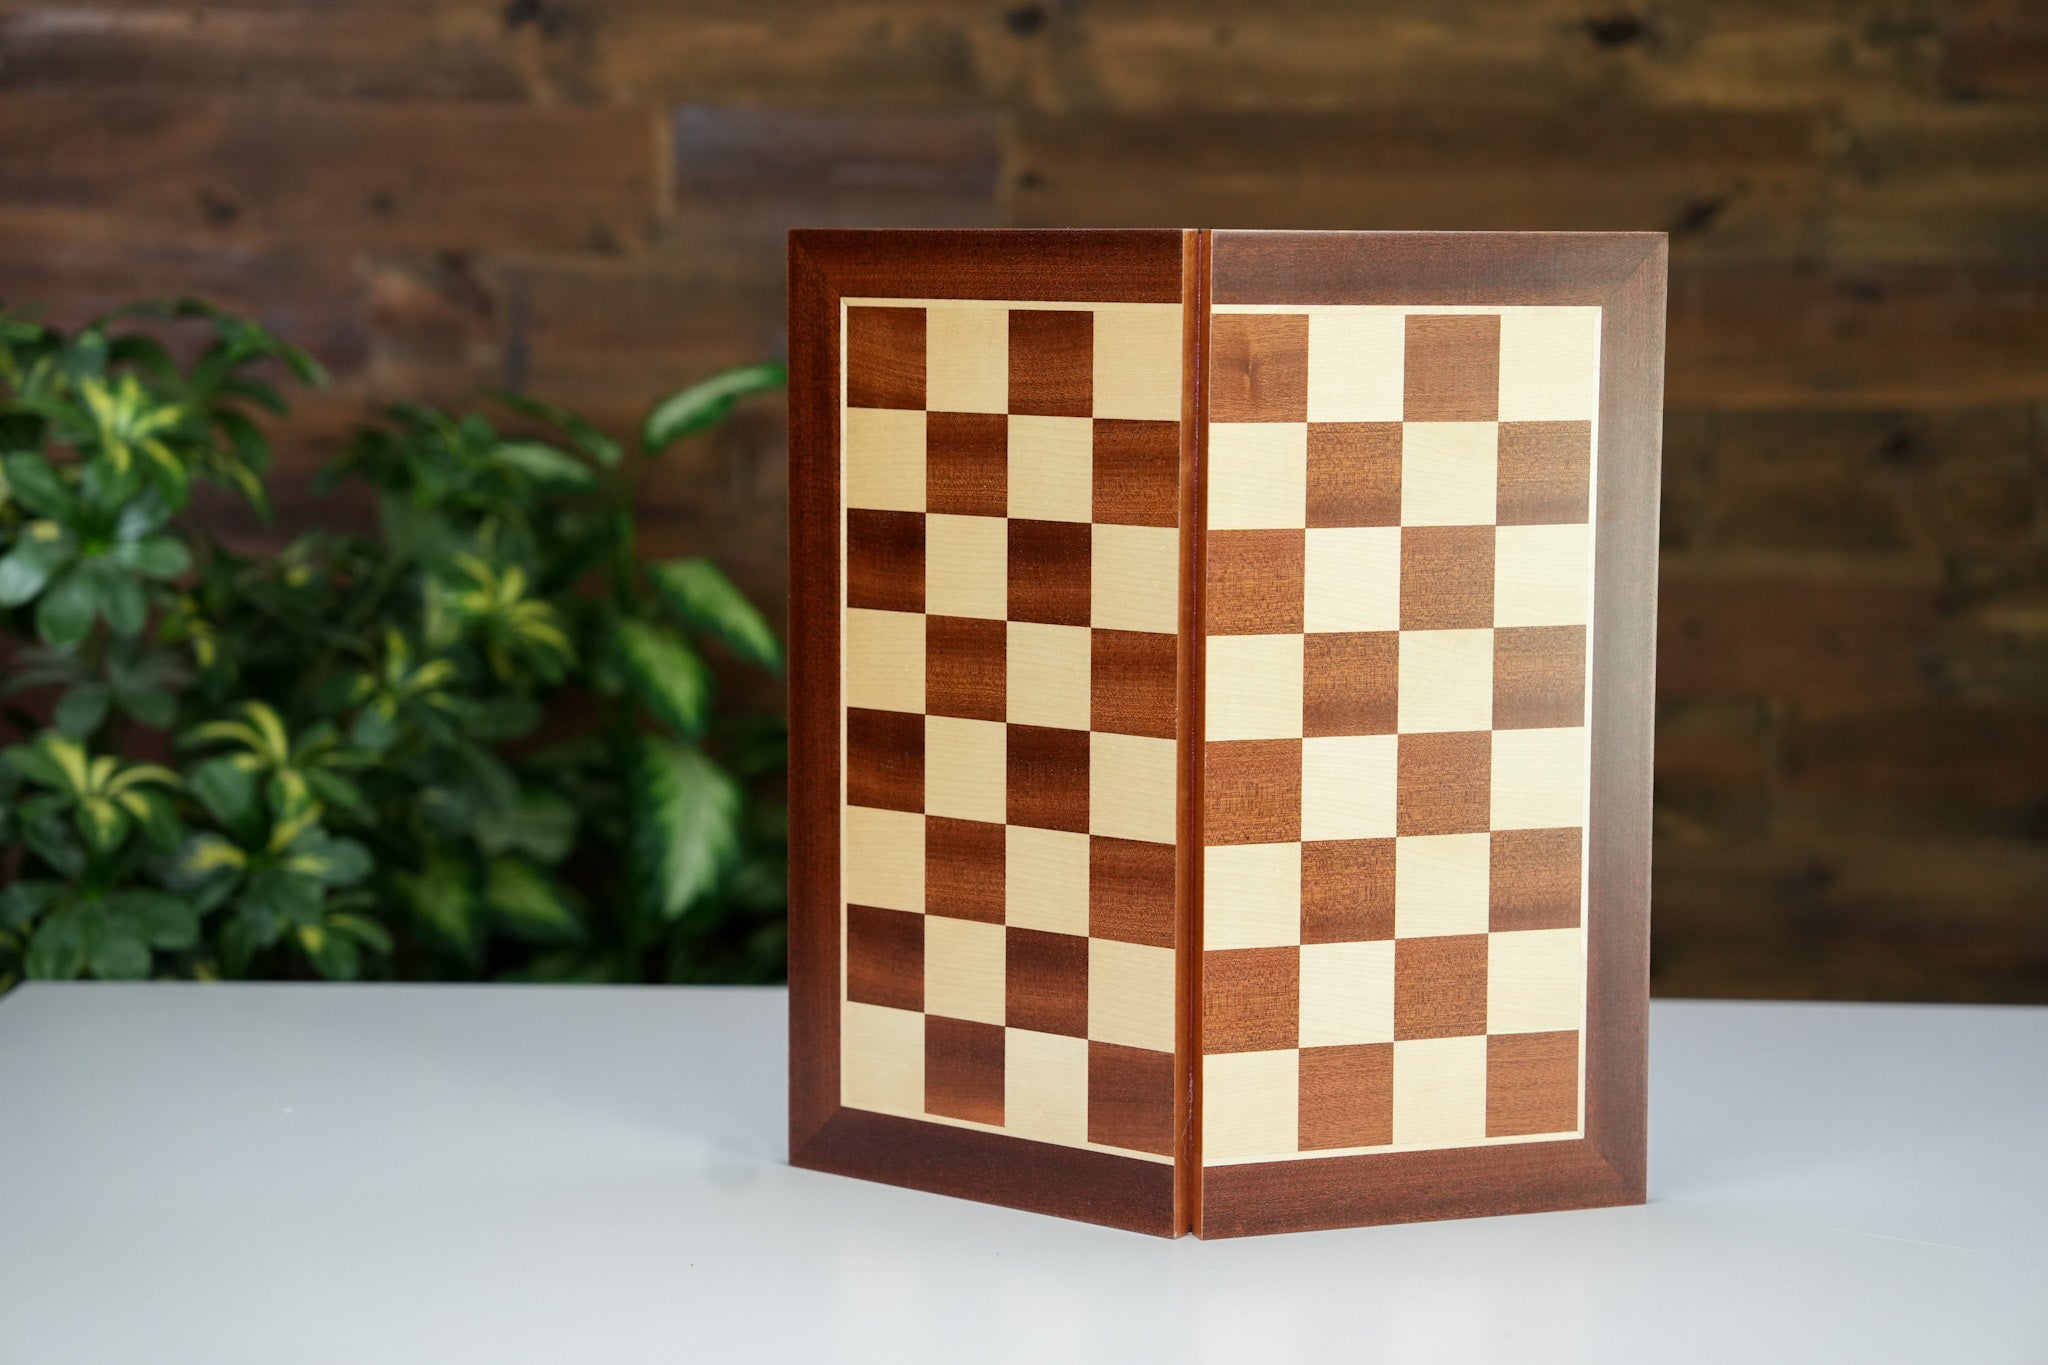 19" Folding Wooden Chess Board - Sycamore & Mahogany - Board - Chess-House